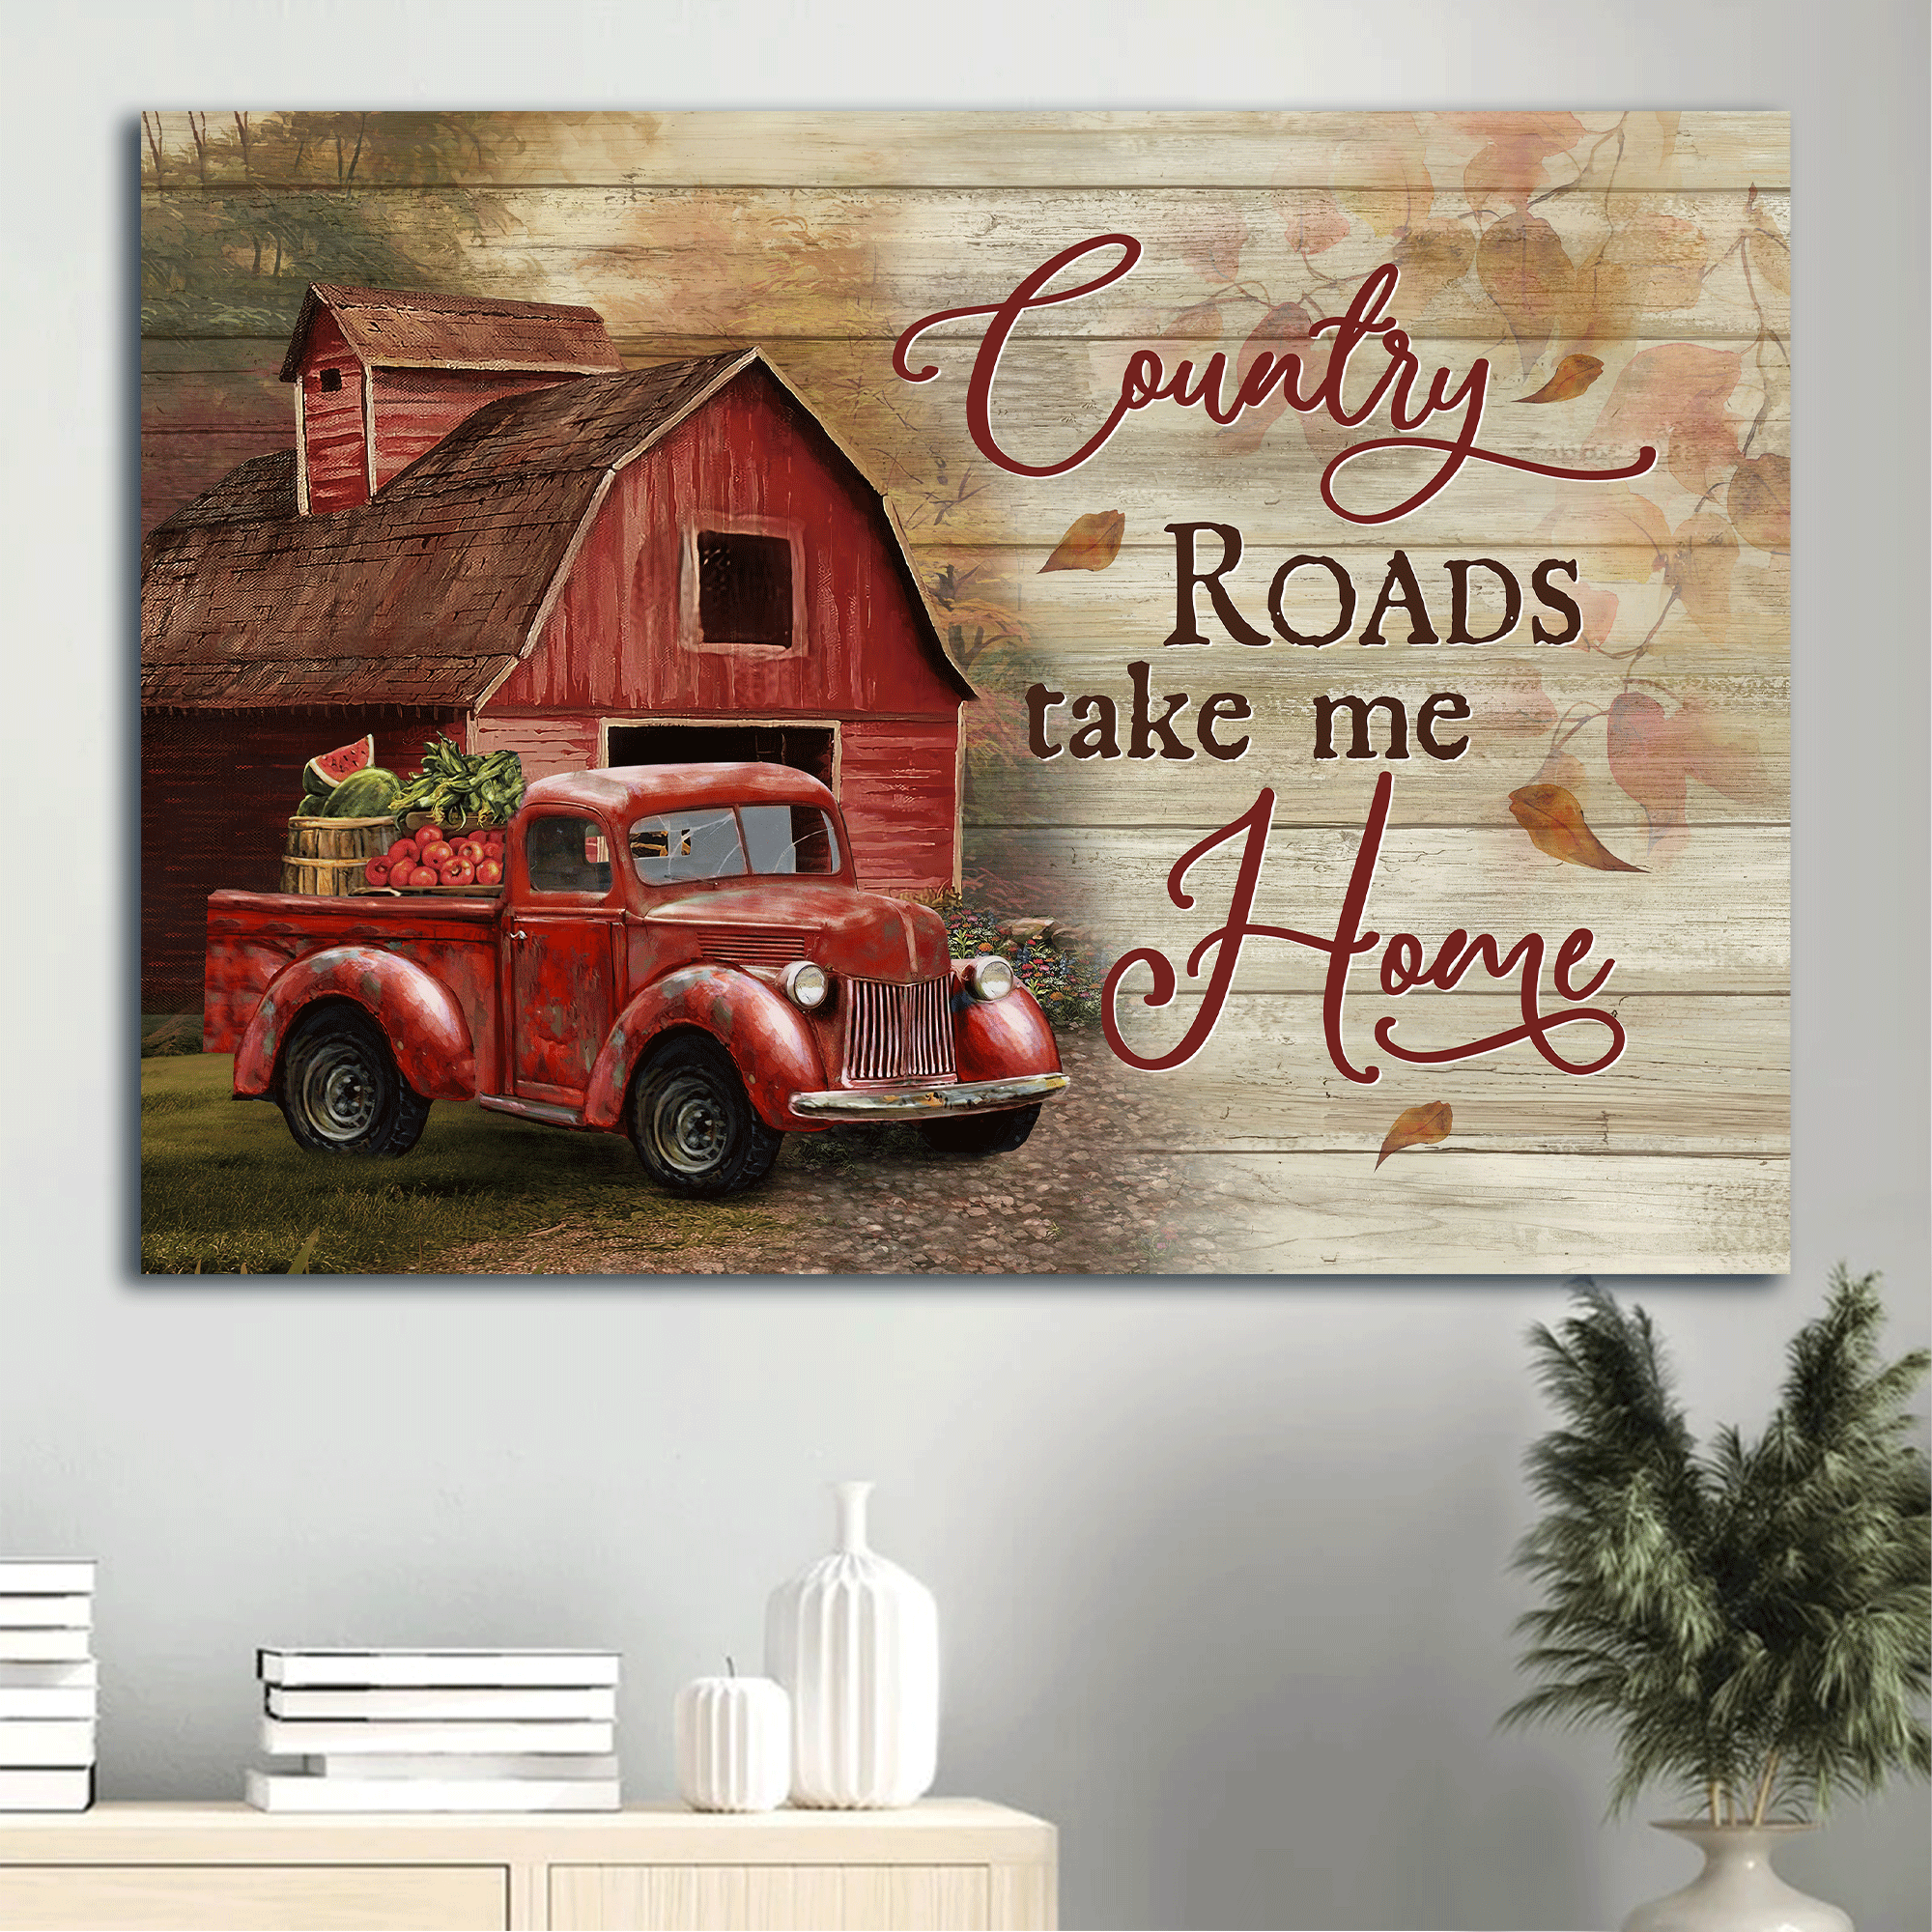 Jesus Landscape Canvas - Big House, Red Ladybug Car, Peace Farm Landscape Canvas - Gift For Christian - Country Roads Take Me Home Landscape Canvas